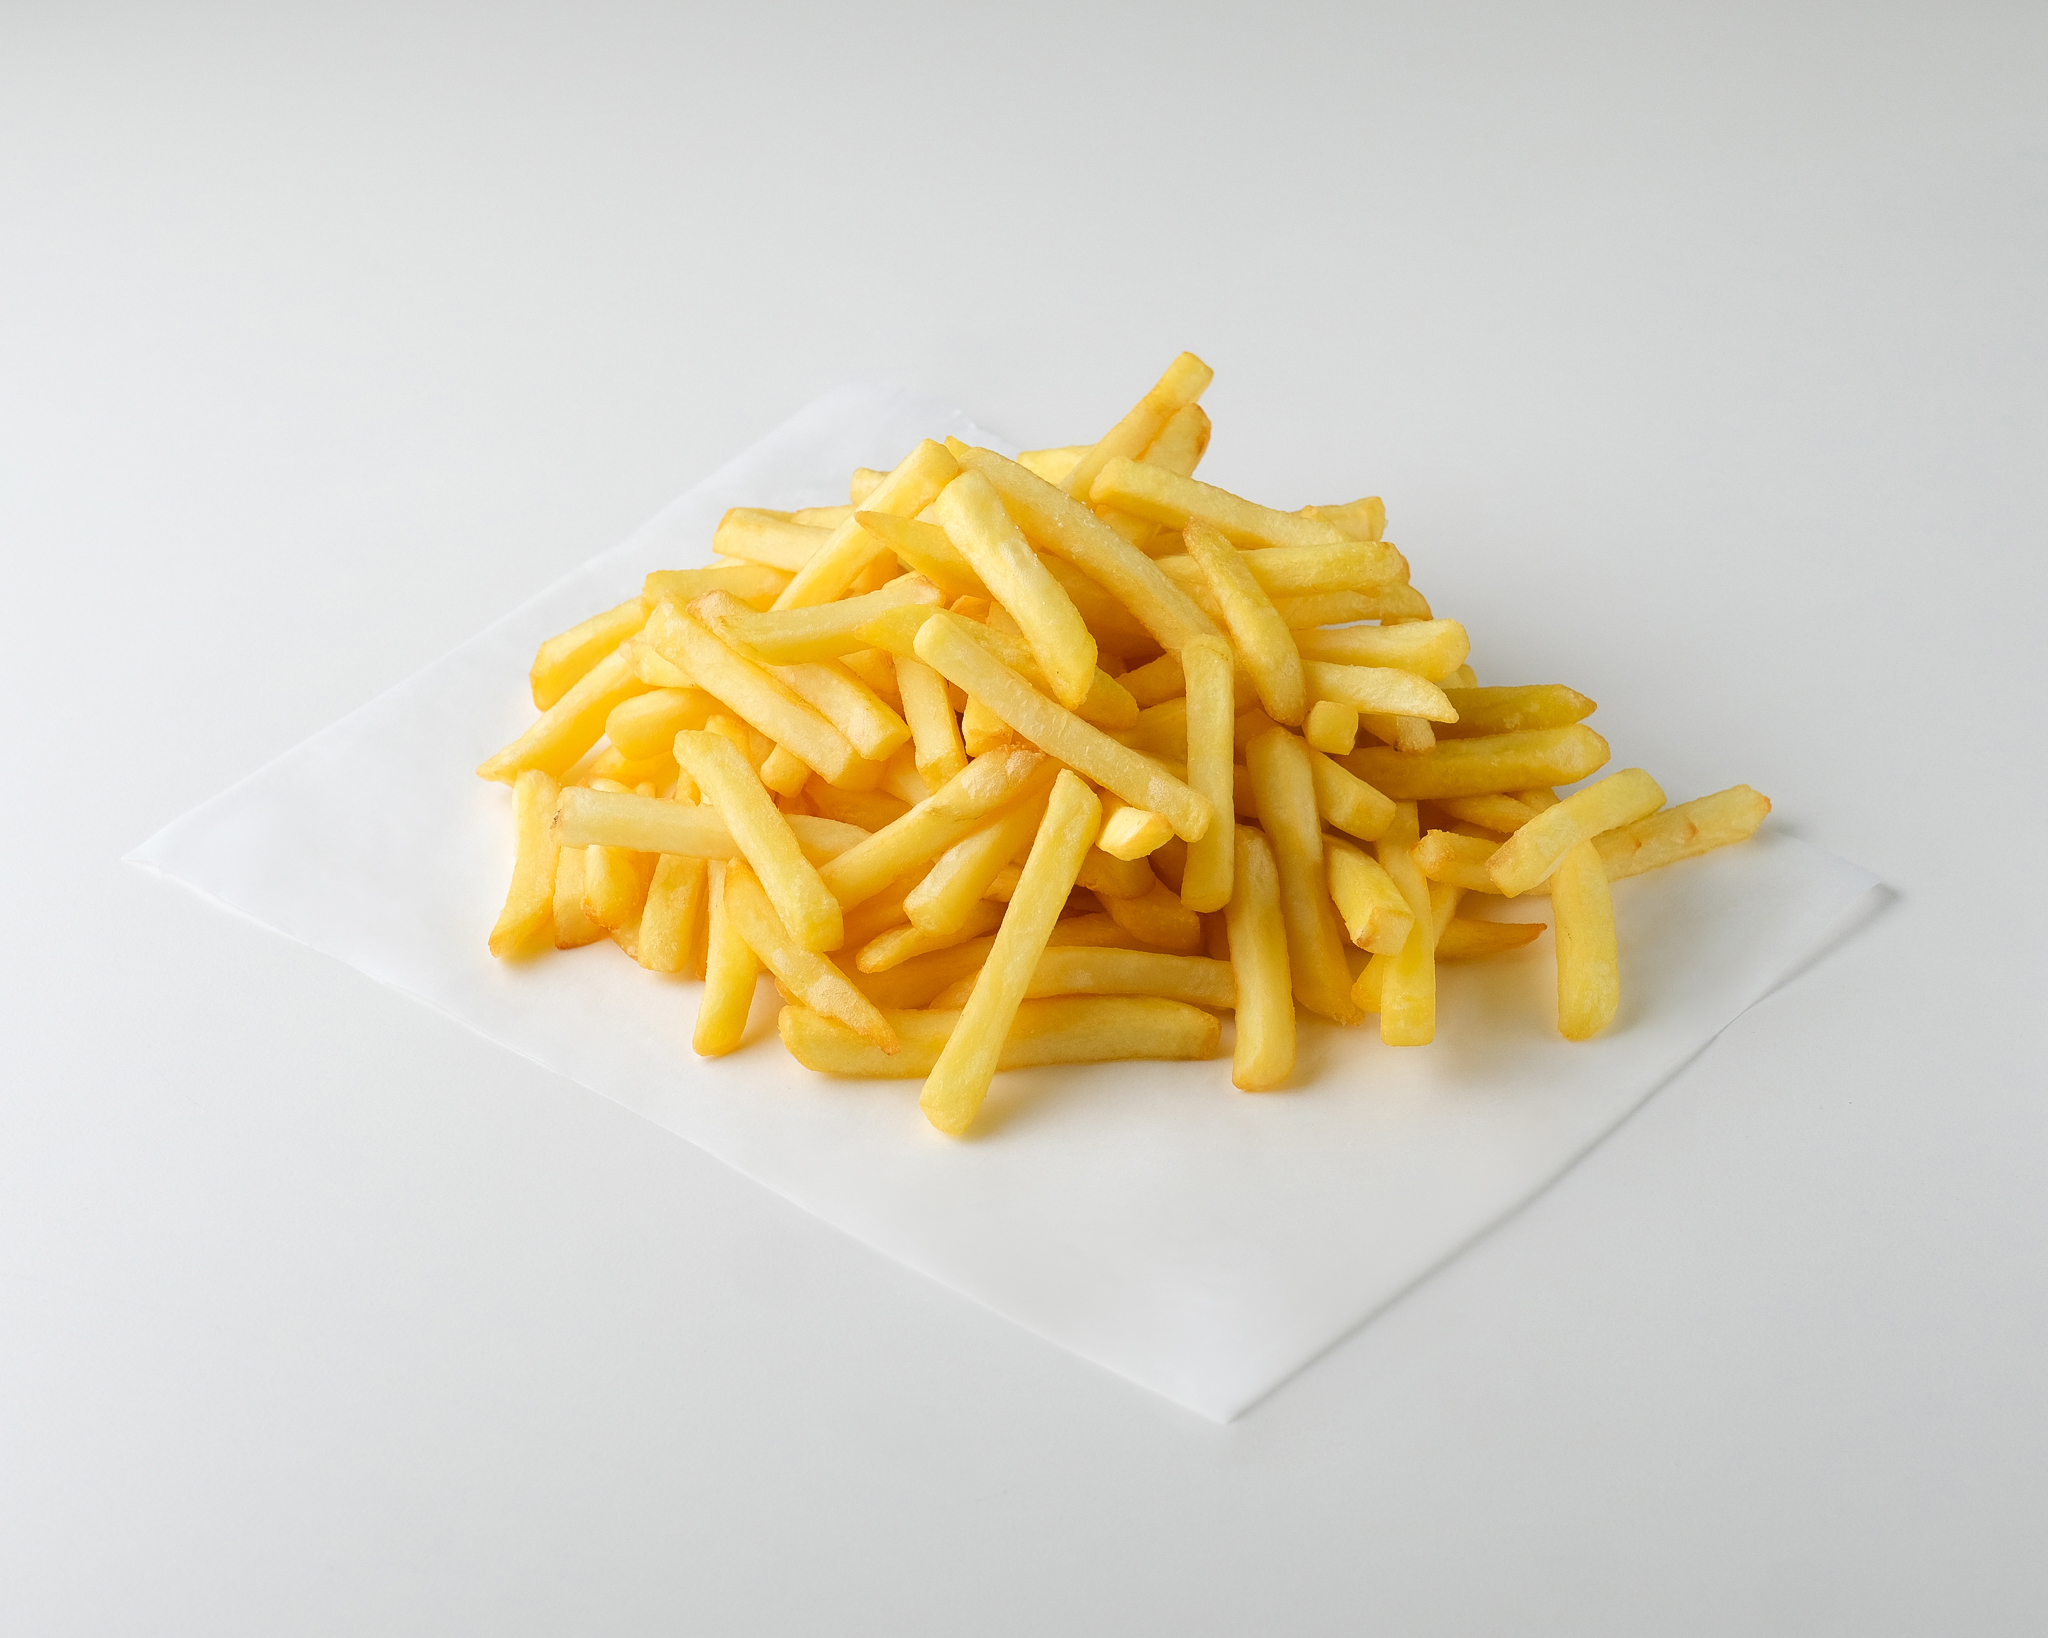 Premium Select Straight Cut 13mm Fries